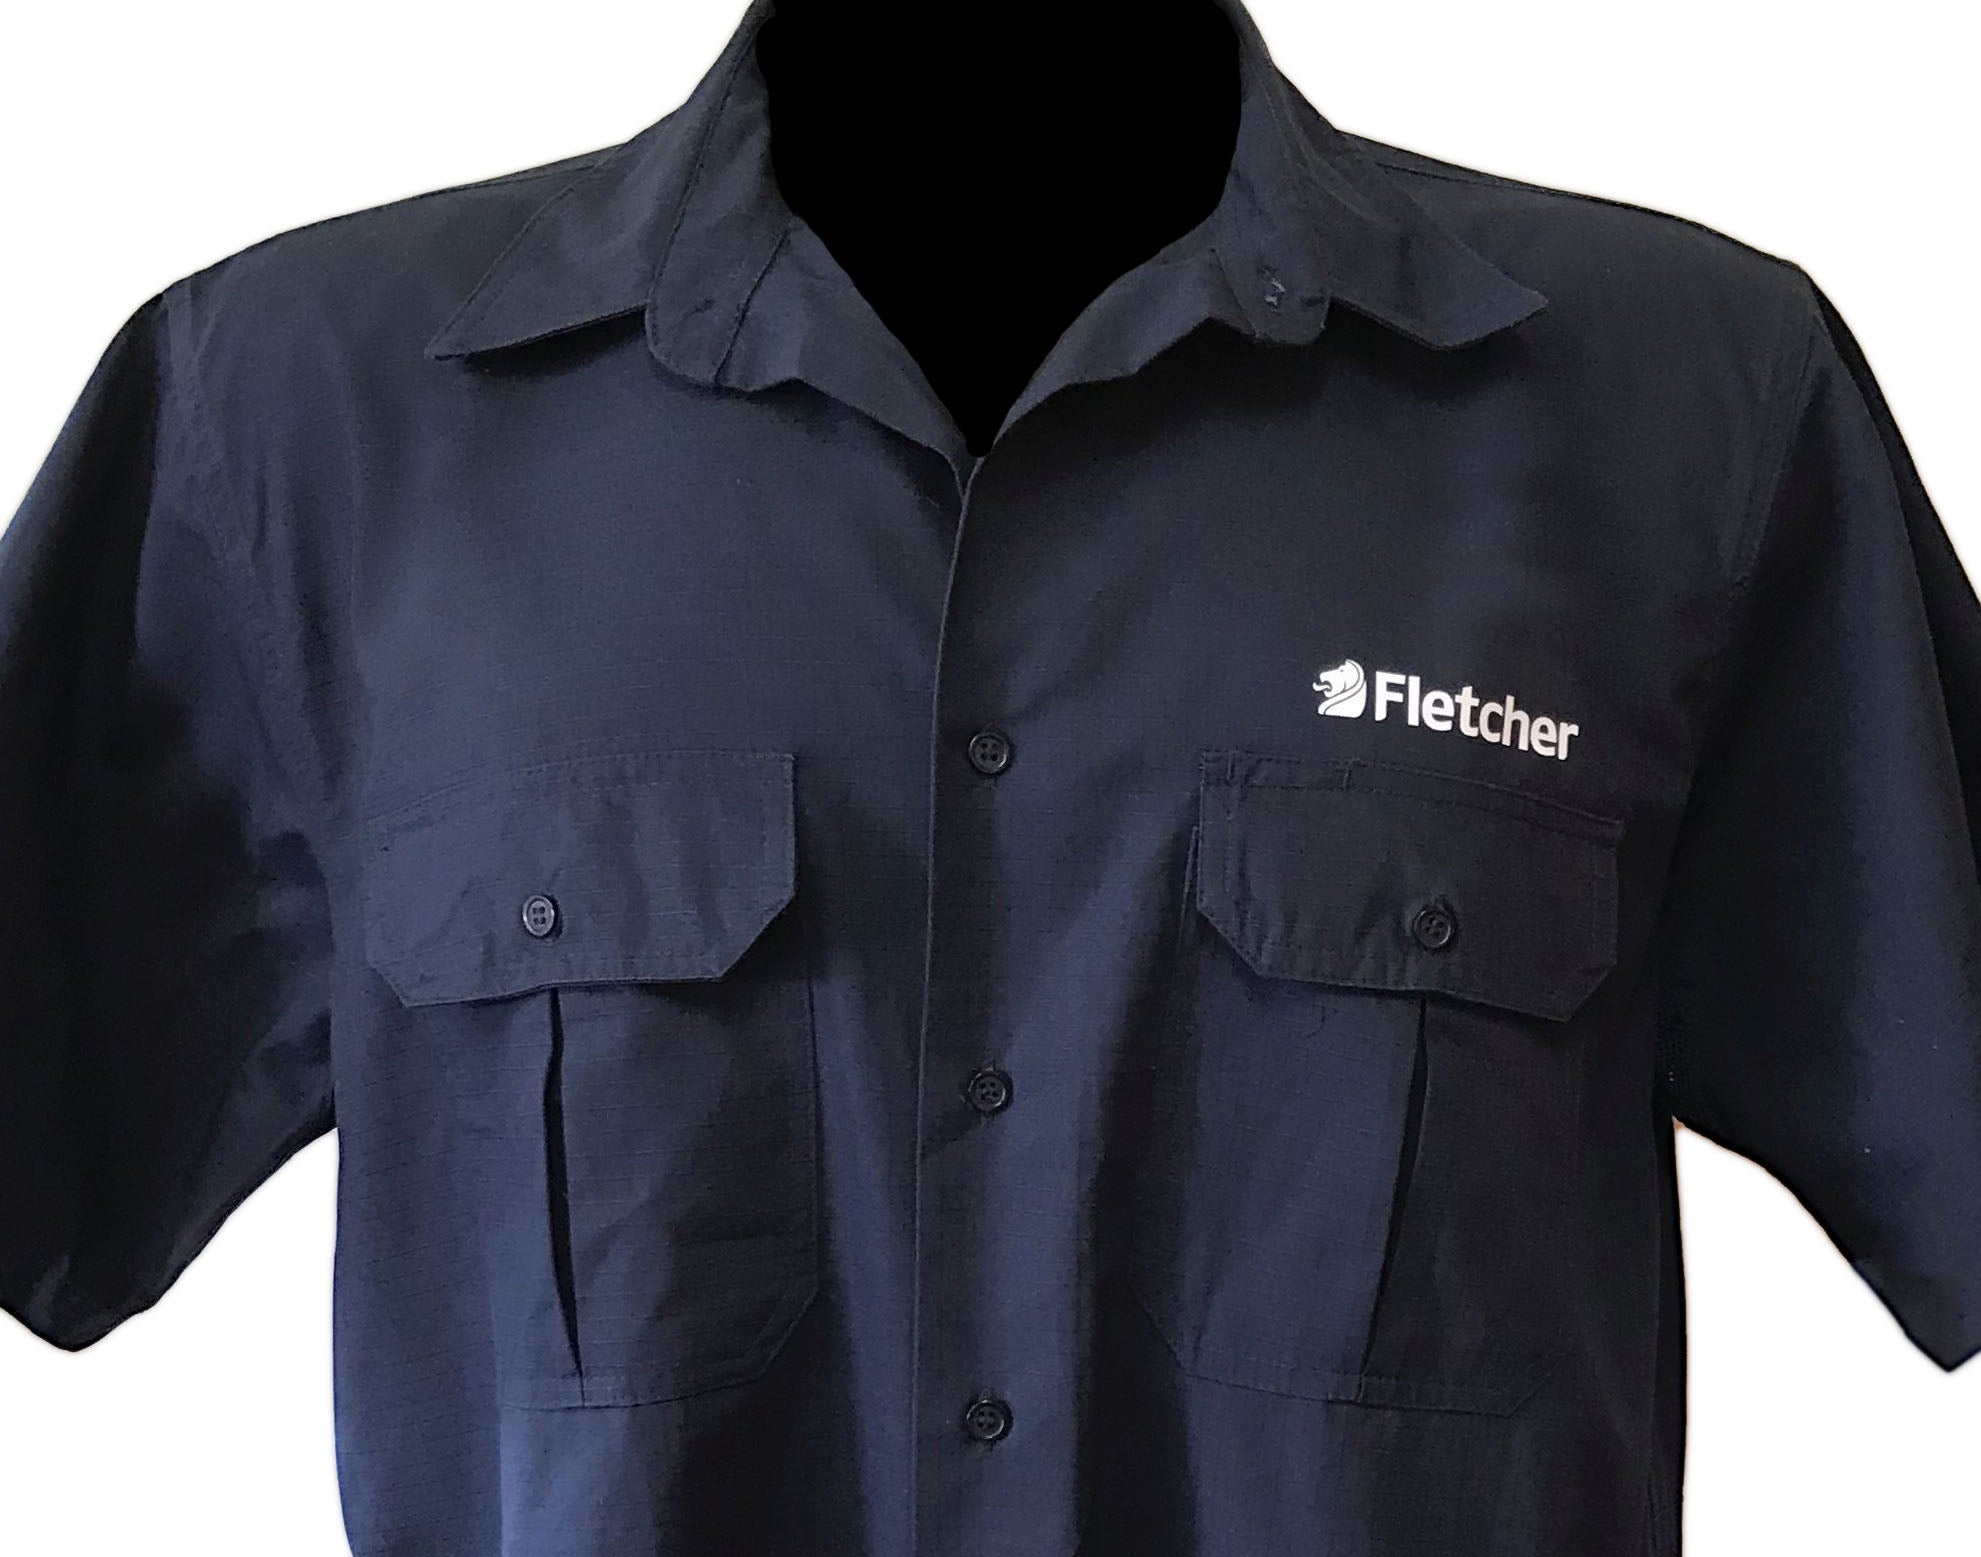 Fletcher work shirt - branded